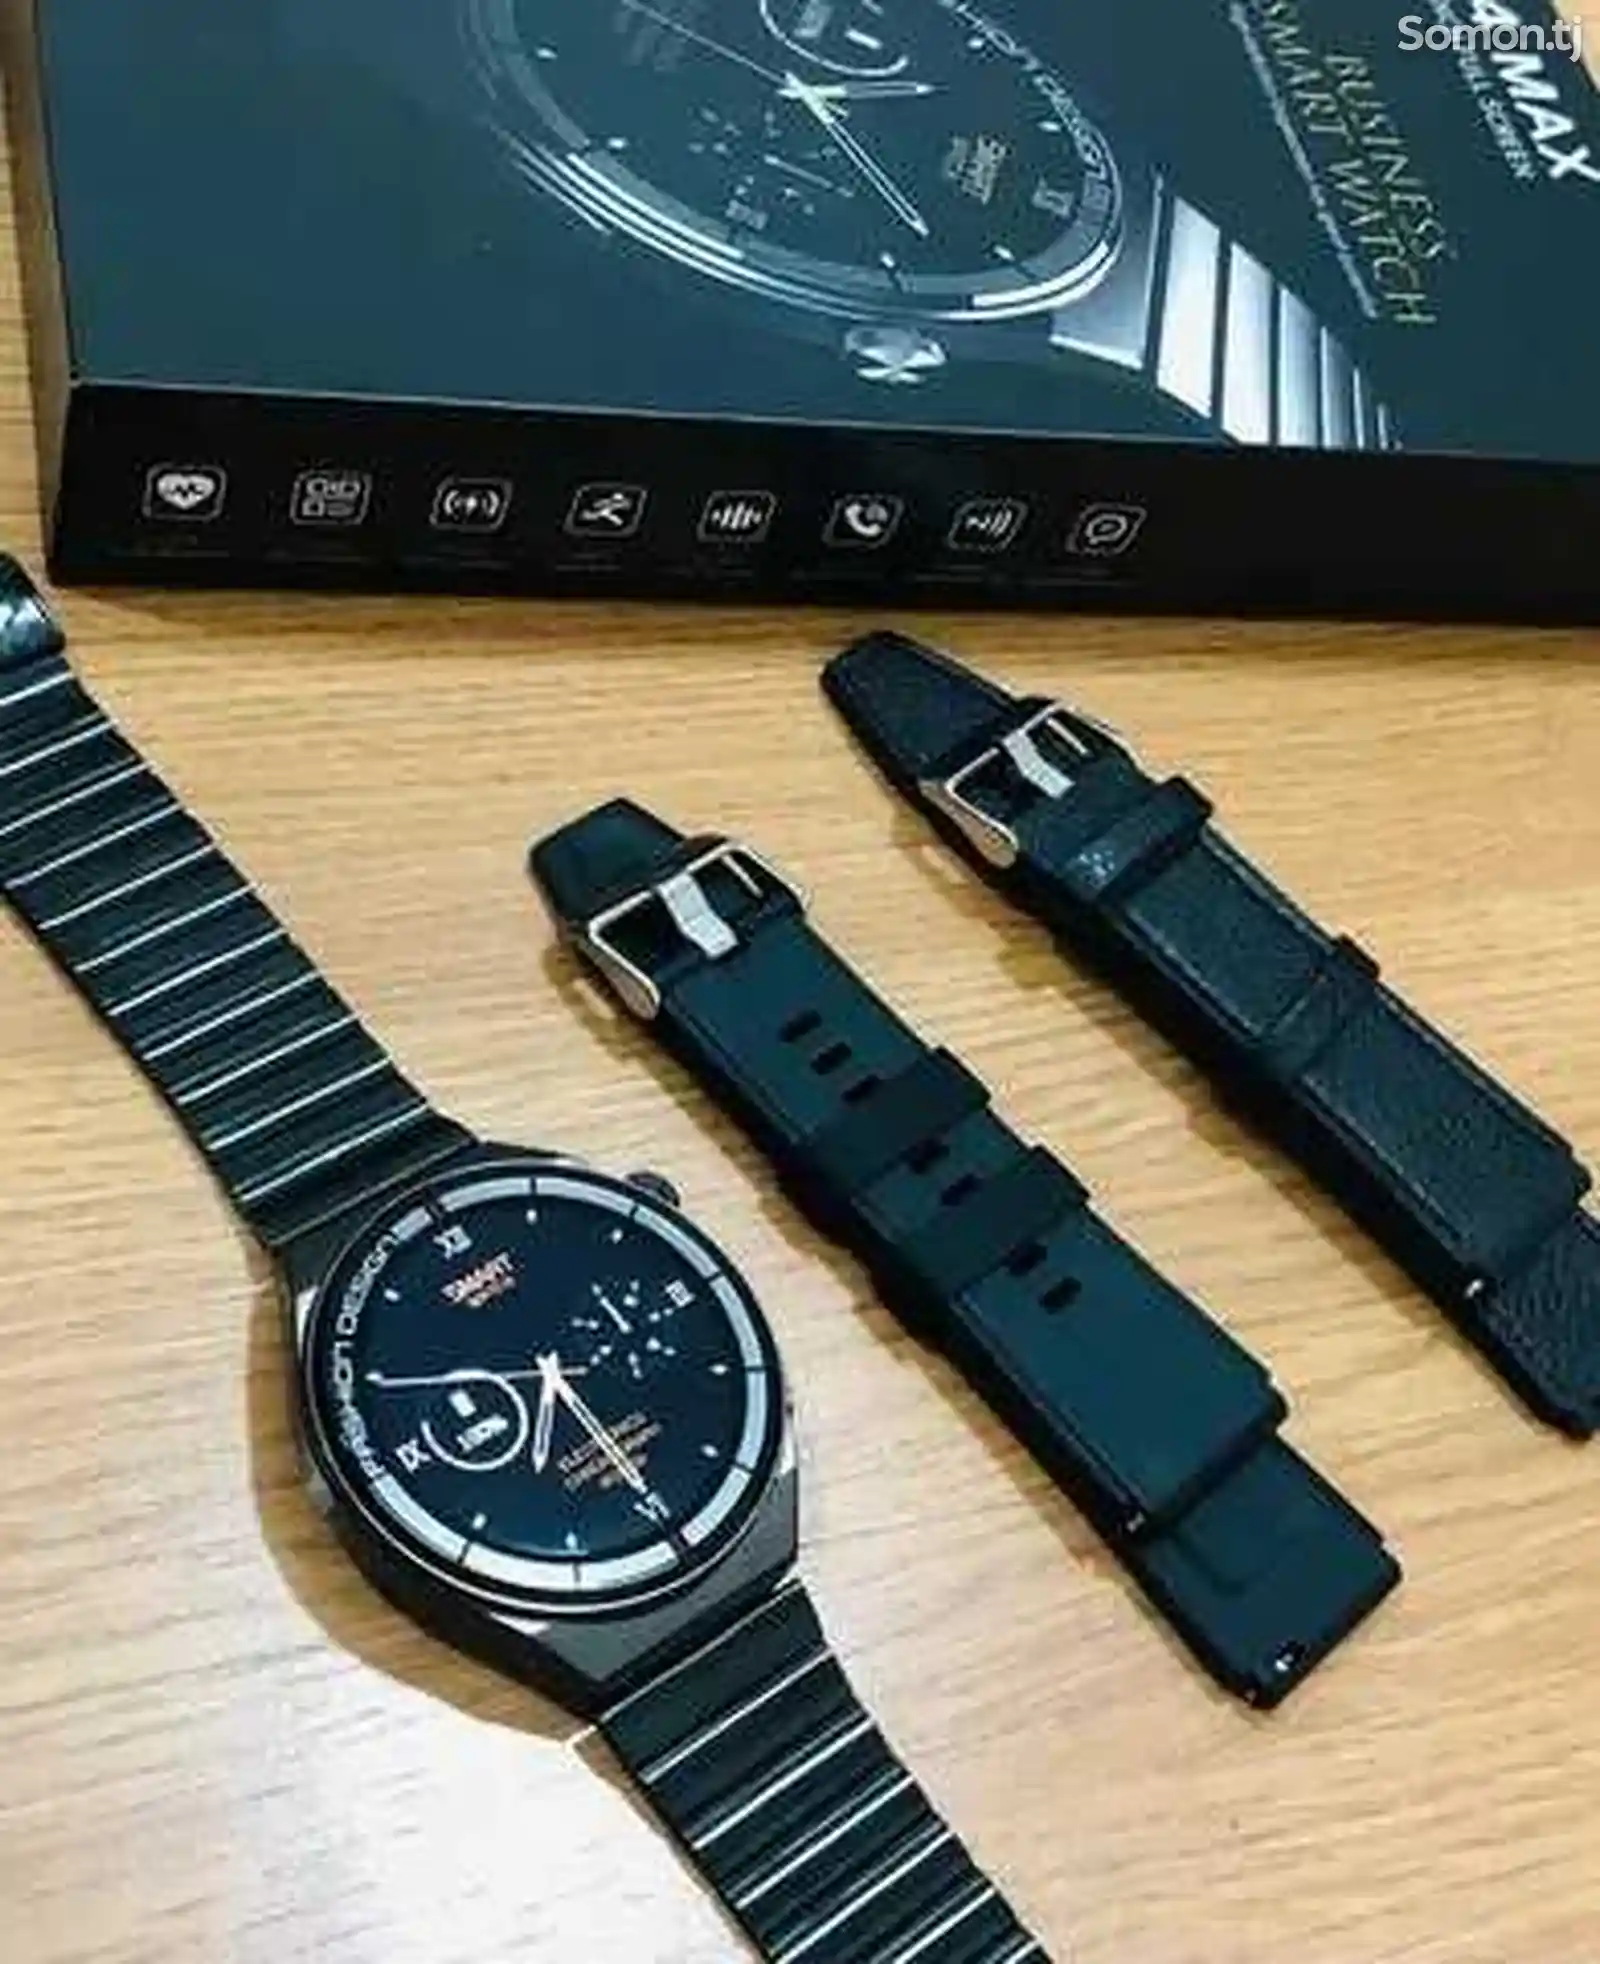 Смарт часы Smart watch H4 Max-6